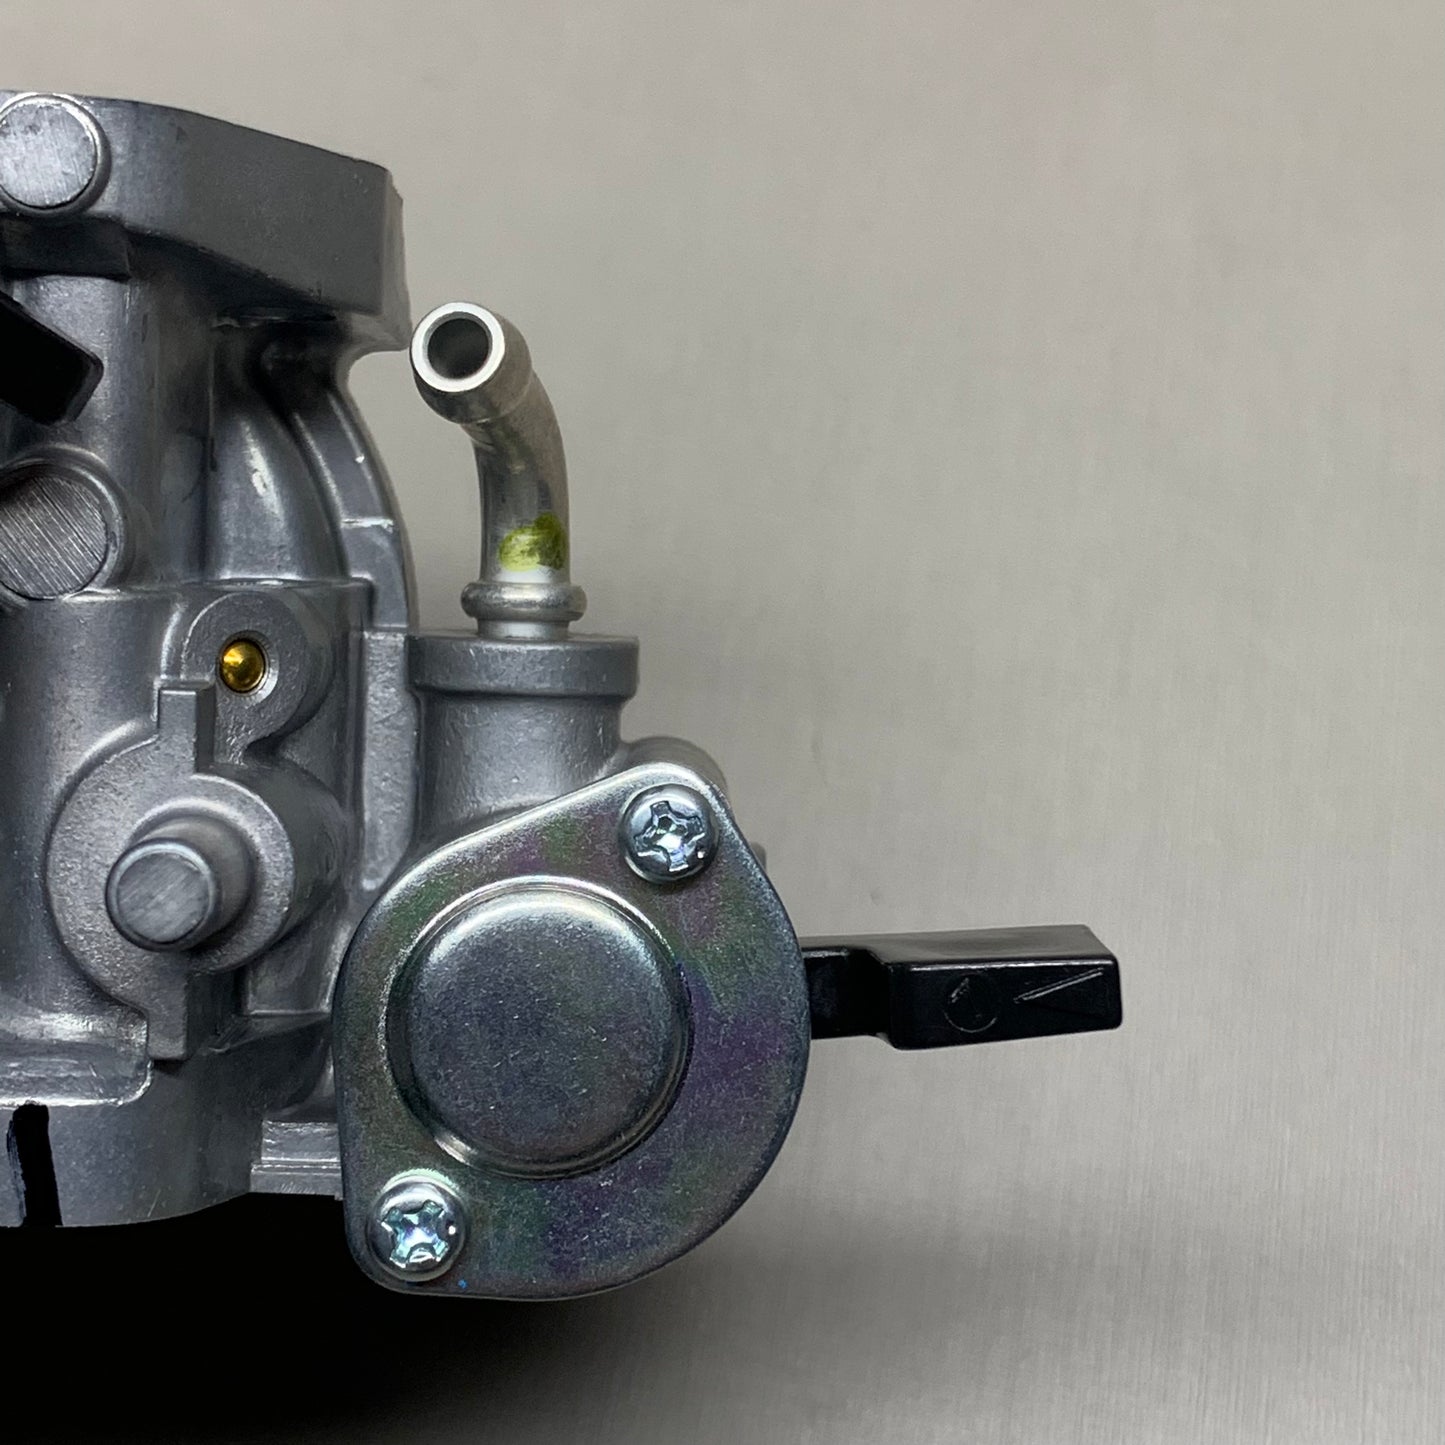 HONDA Carburetor Assy. 16100-Z4H-911 (New)